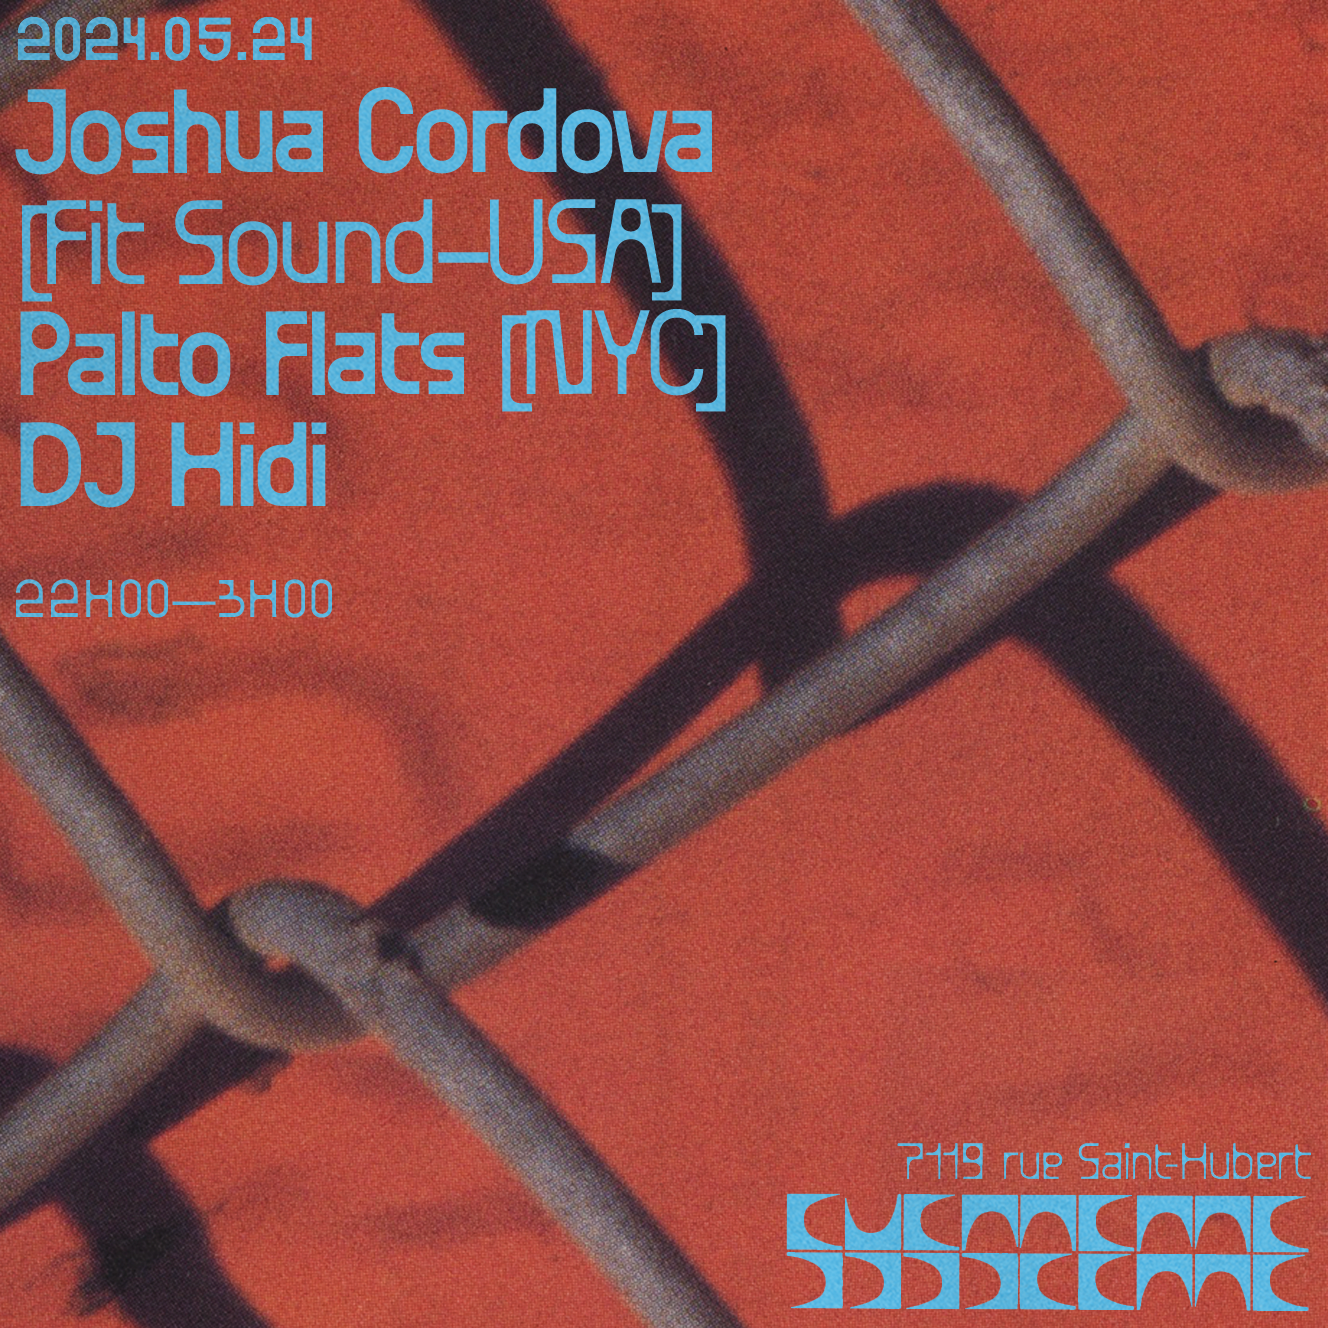 Joshua Cordova [Fit Sound - USA] + Palto Flats [NYC] + DJ Hidi - フライヤー表